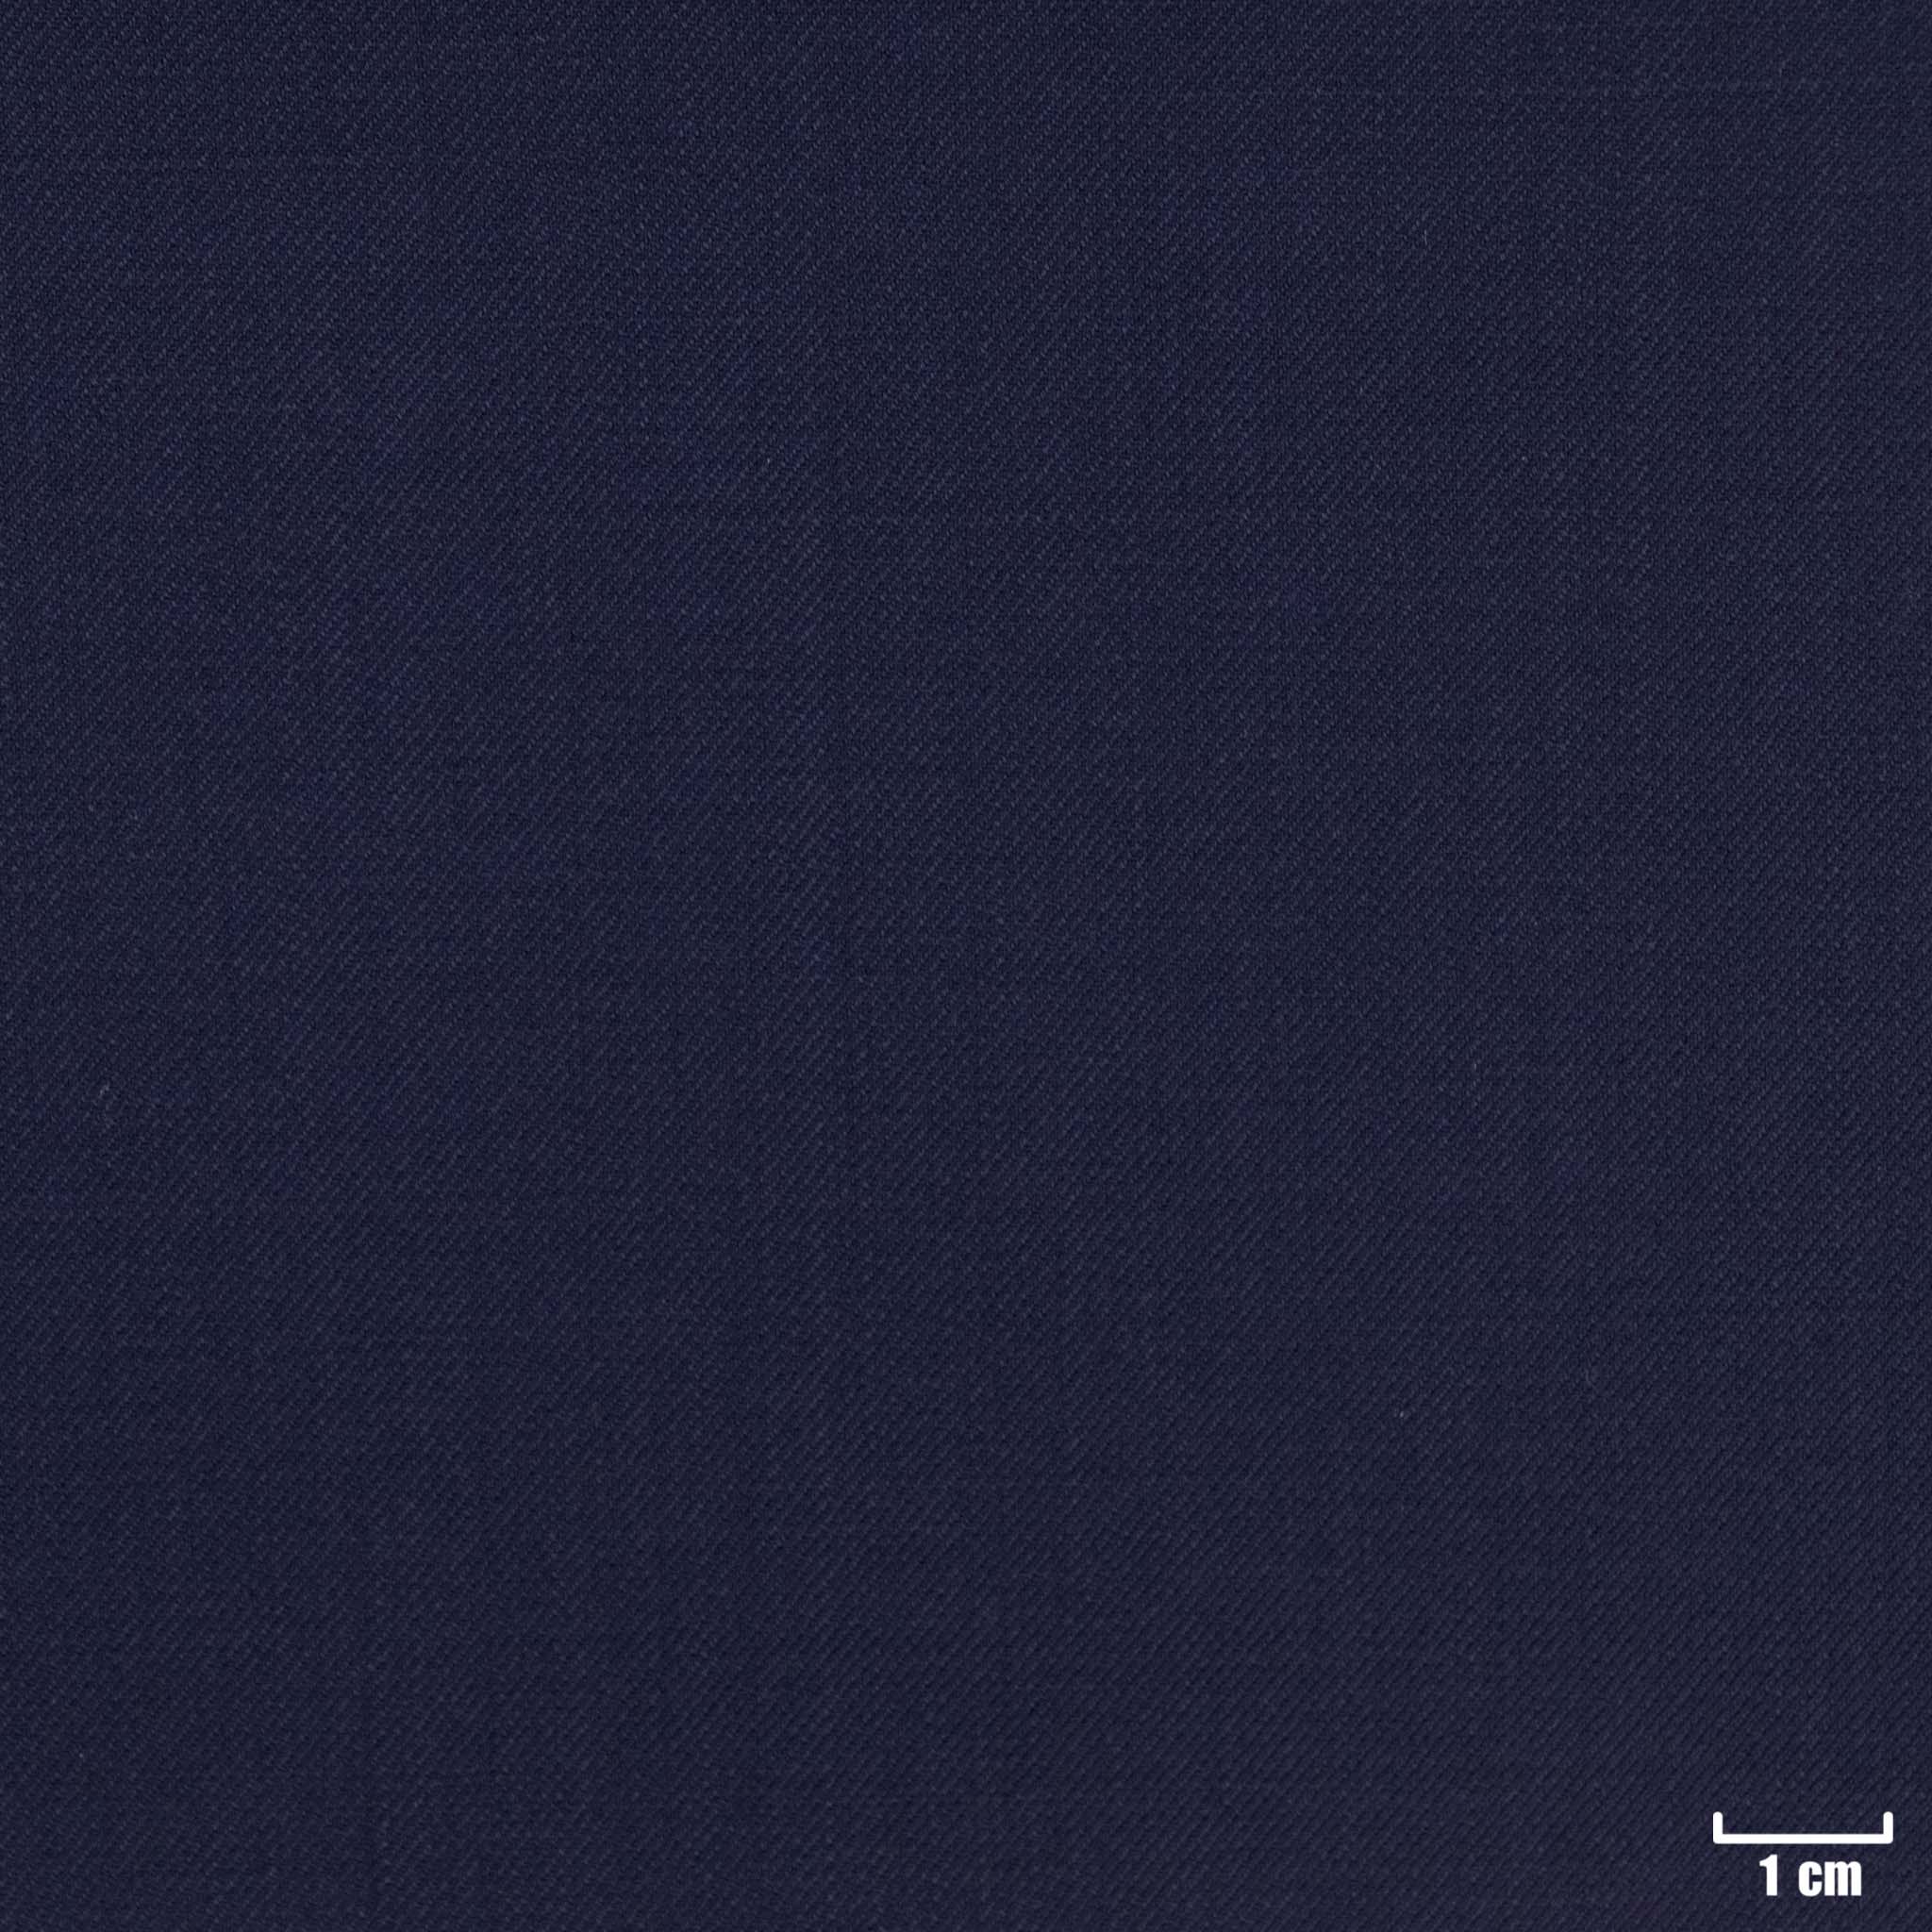 dark navy blue pantone